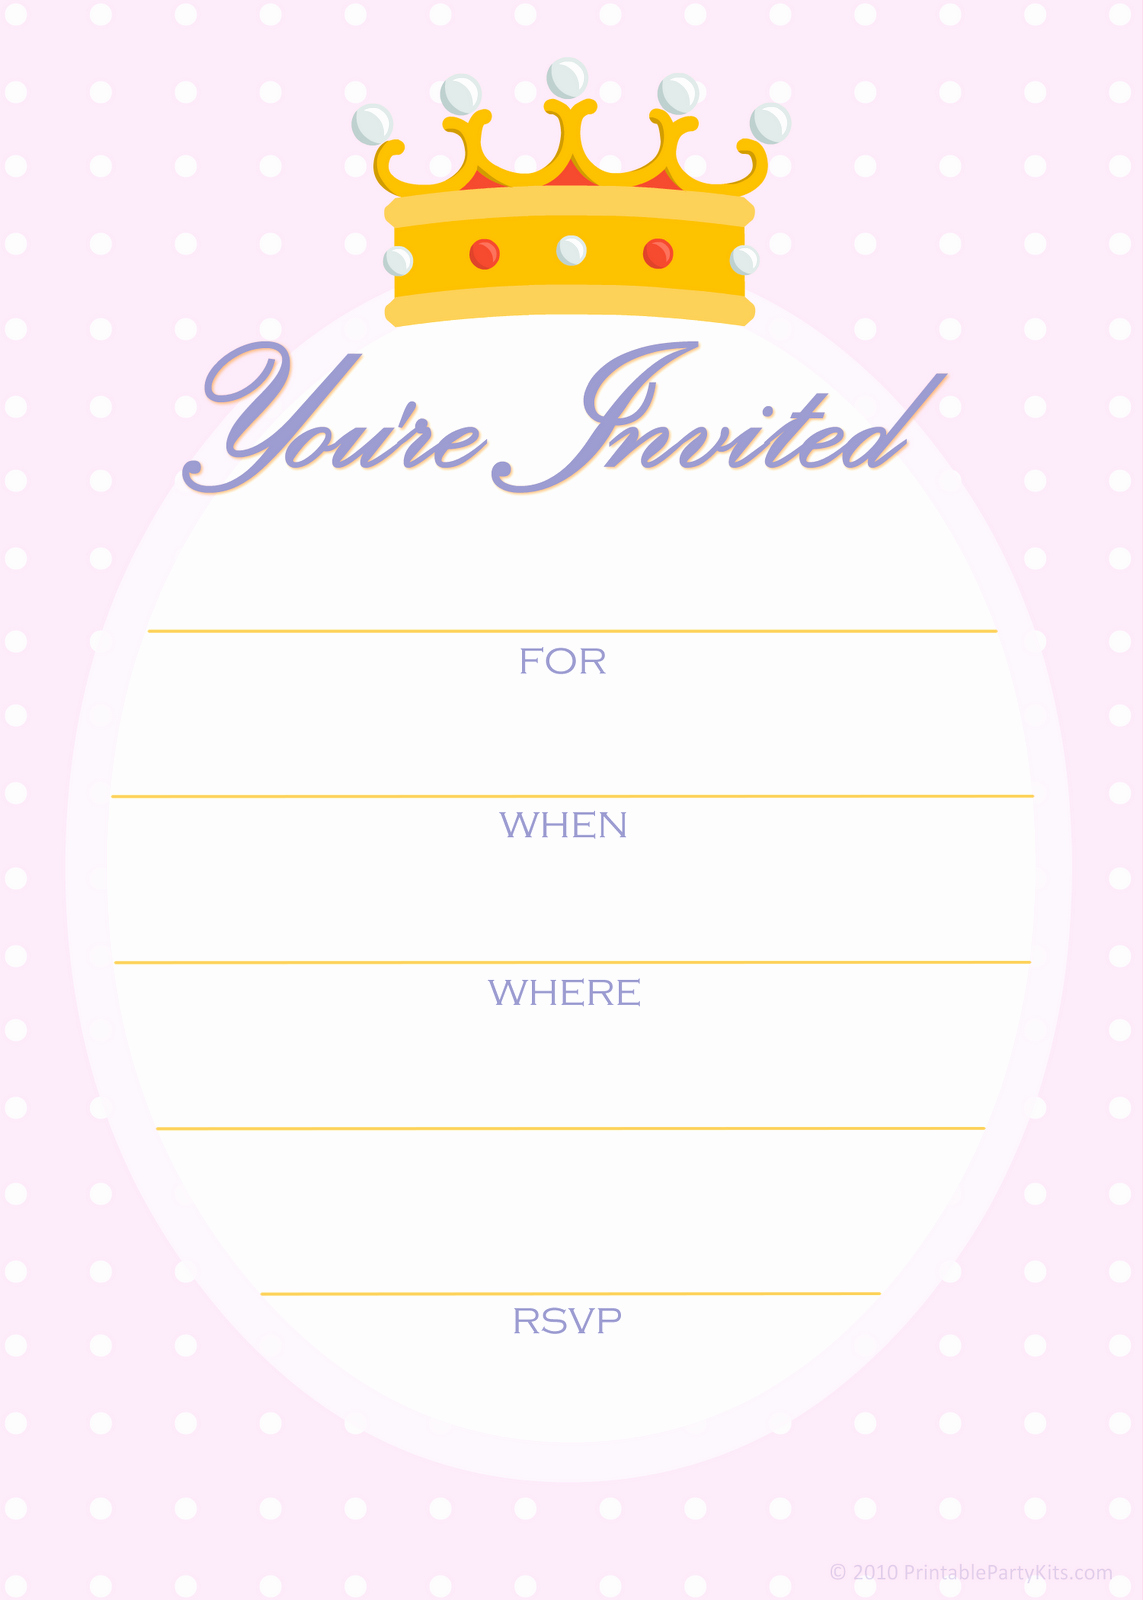 Princess Party Invitation Template Fresh Free Printable Party Invitations Free Invitations for A Princess Birthday Party